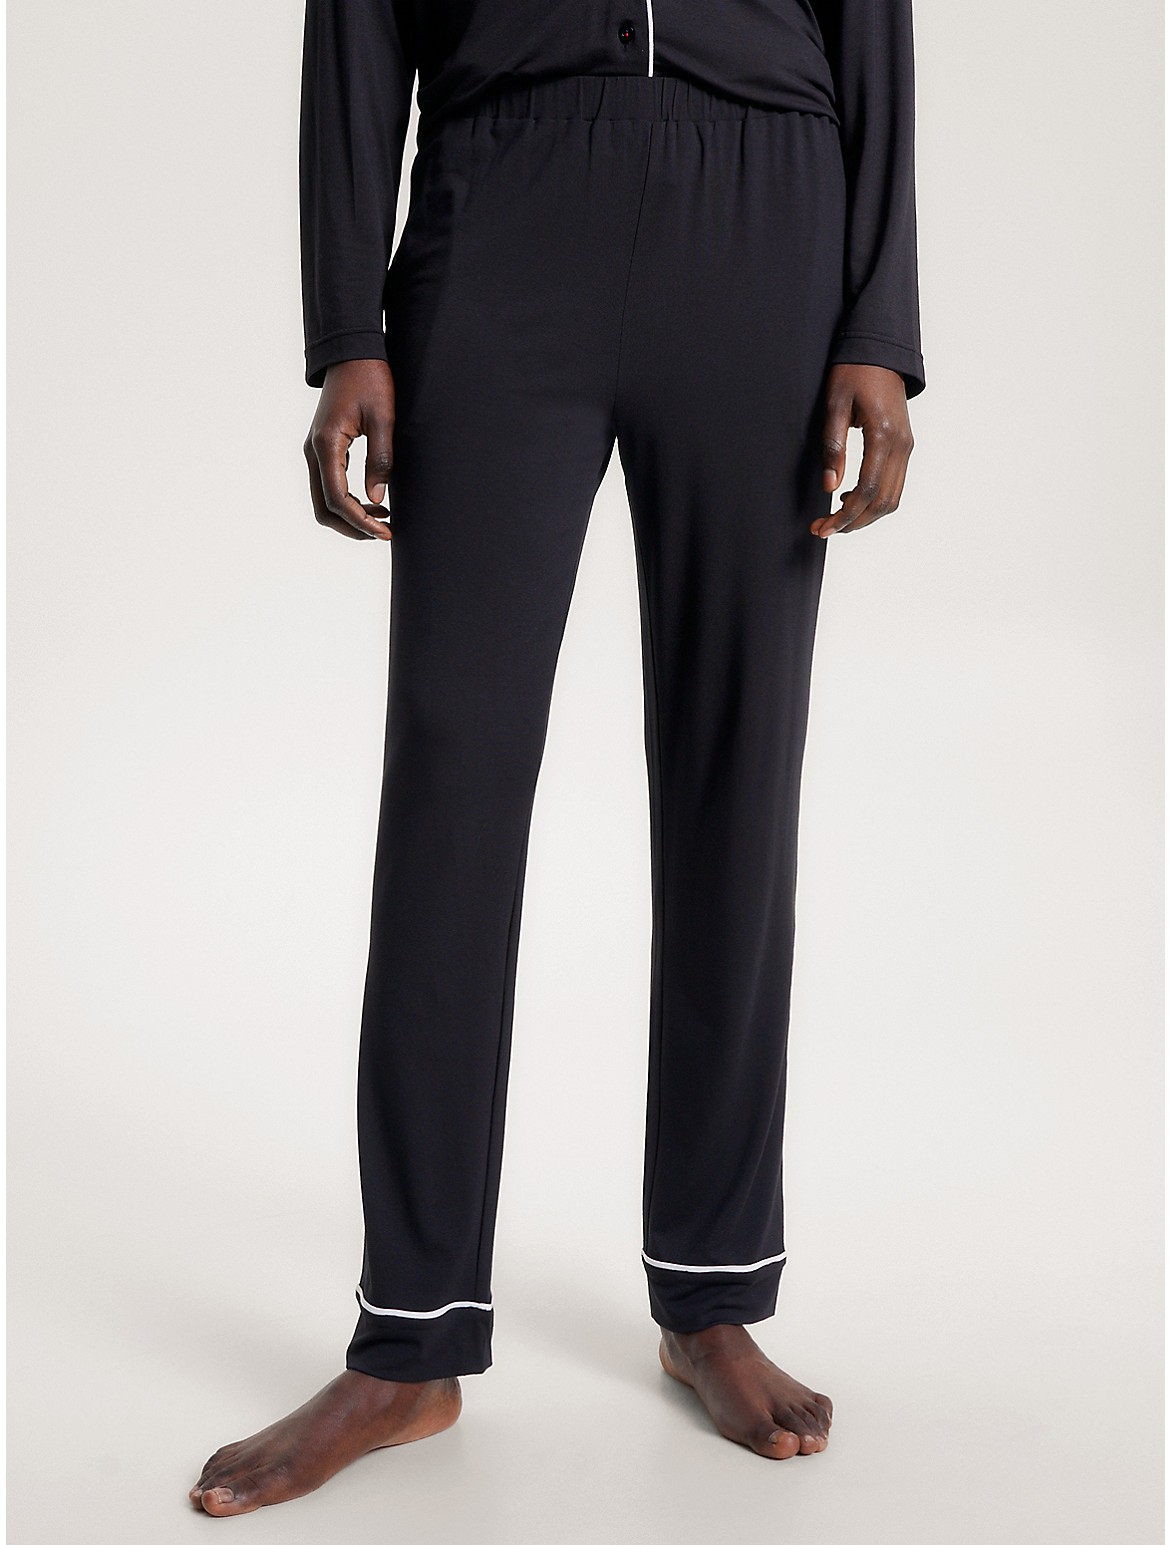 Tommy Hilfiger Women's Piped Trim Pajama Pant - Black - L